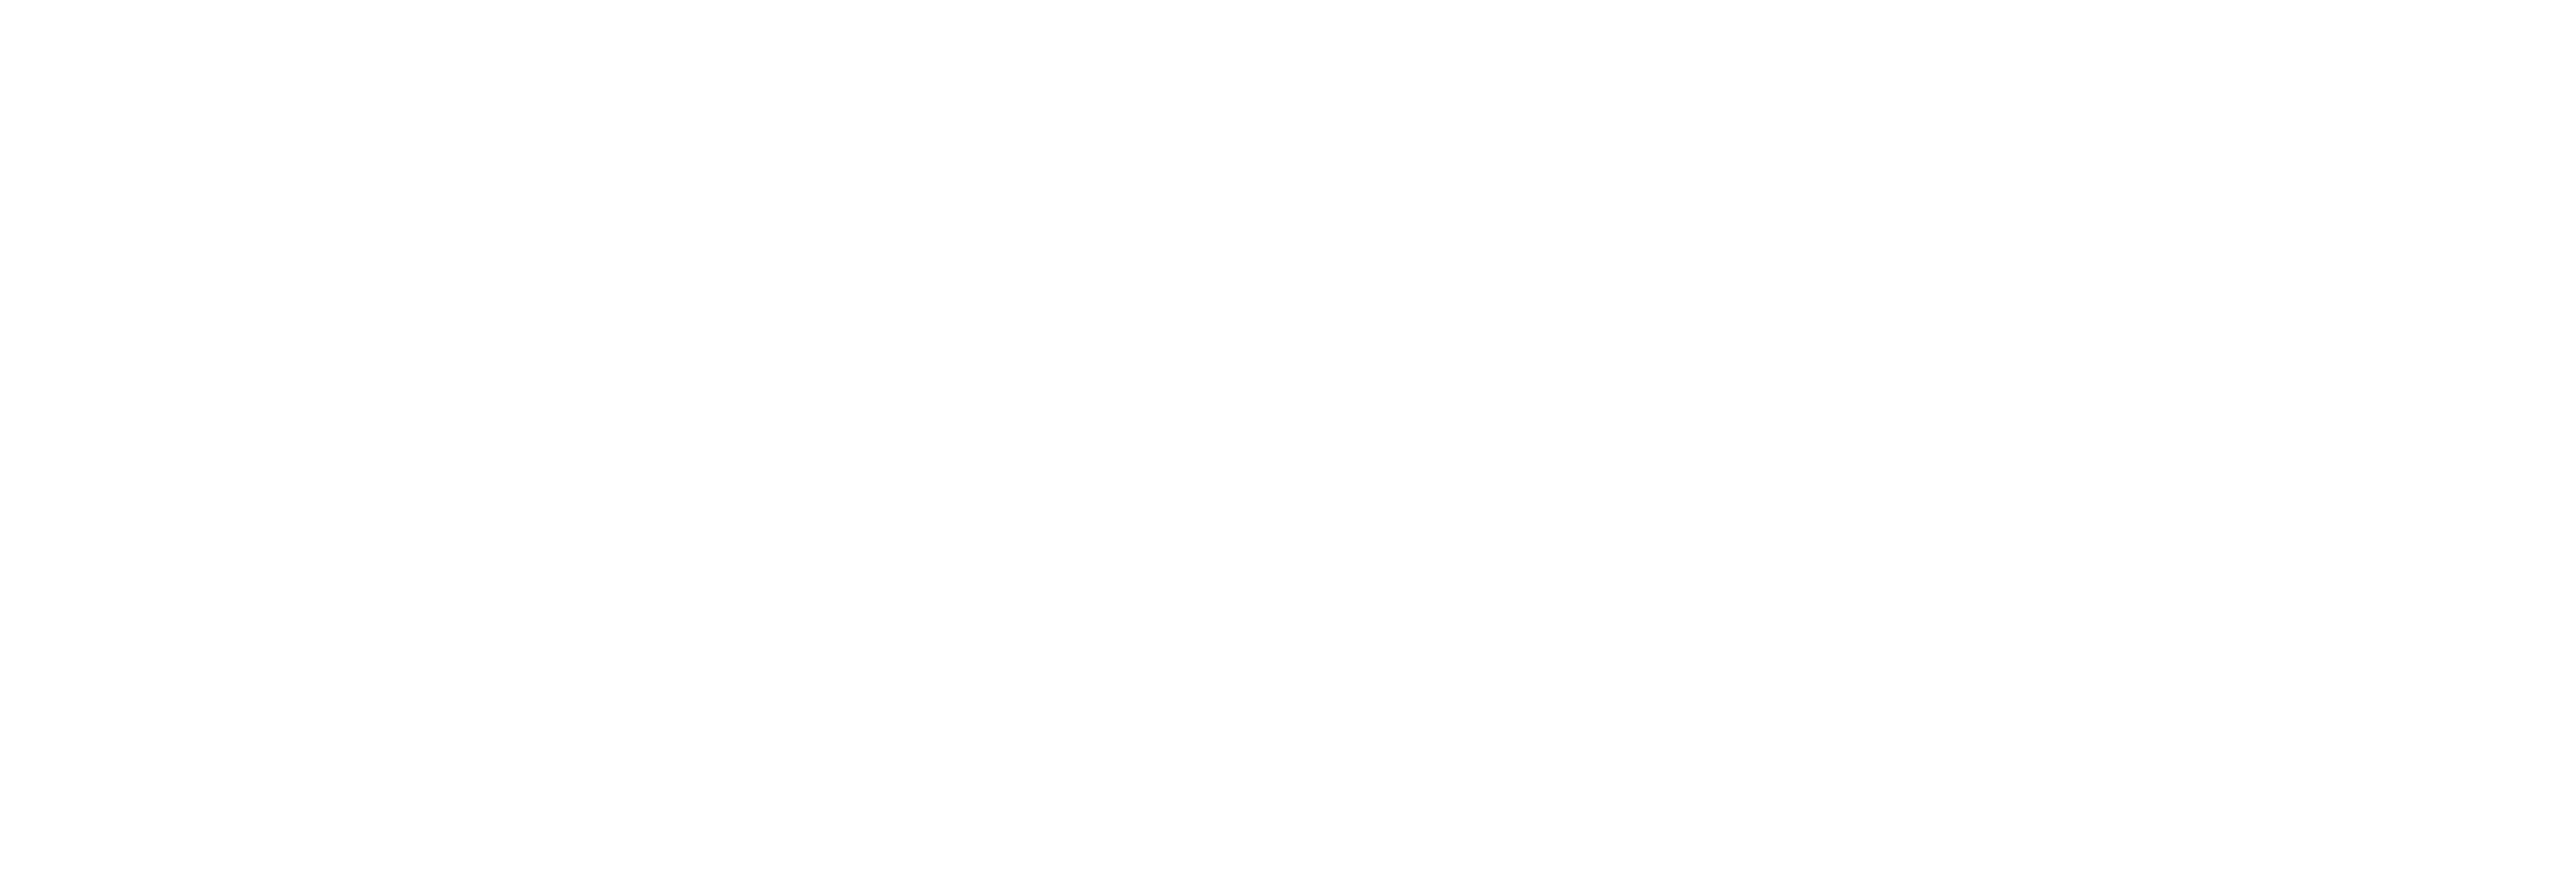 Red Dead Redemption 2 标志